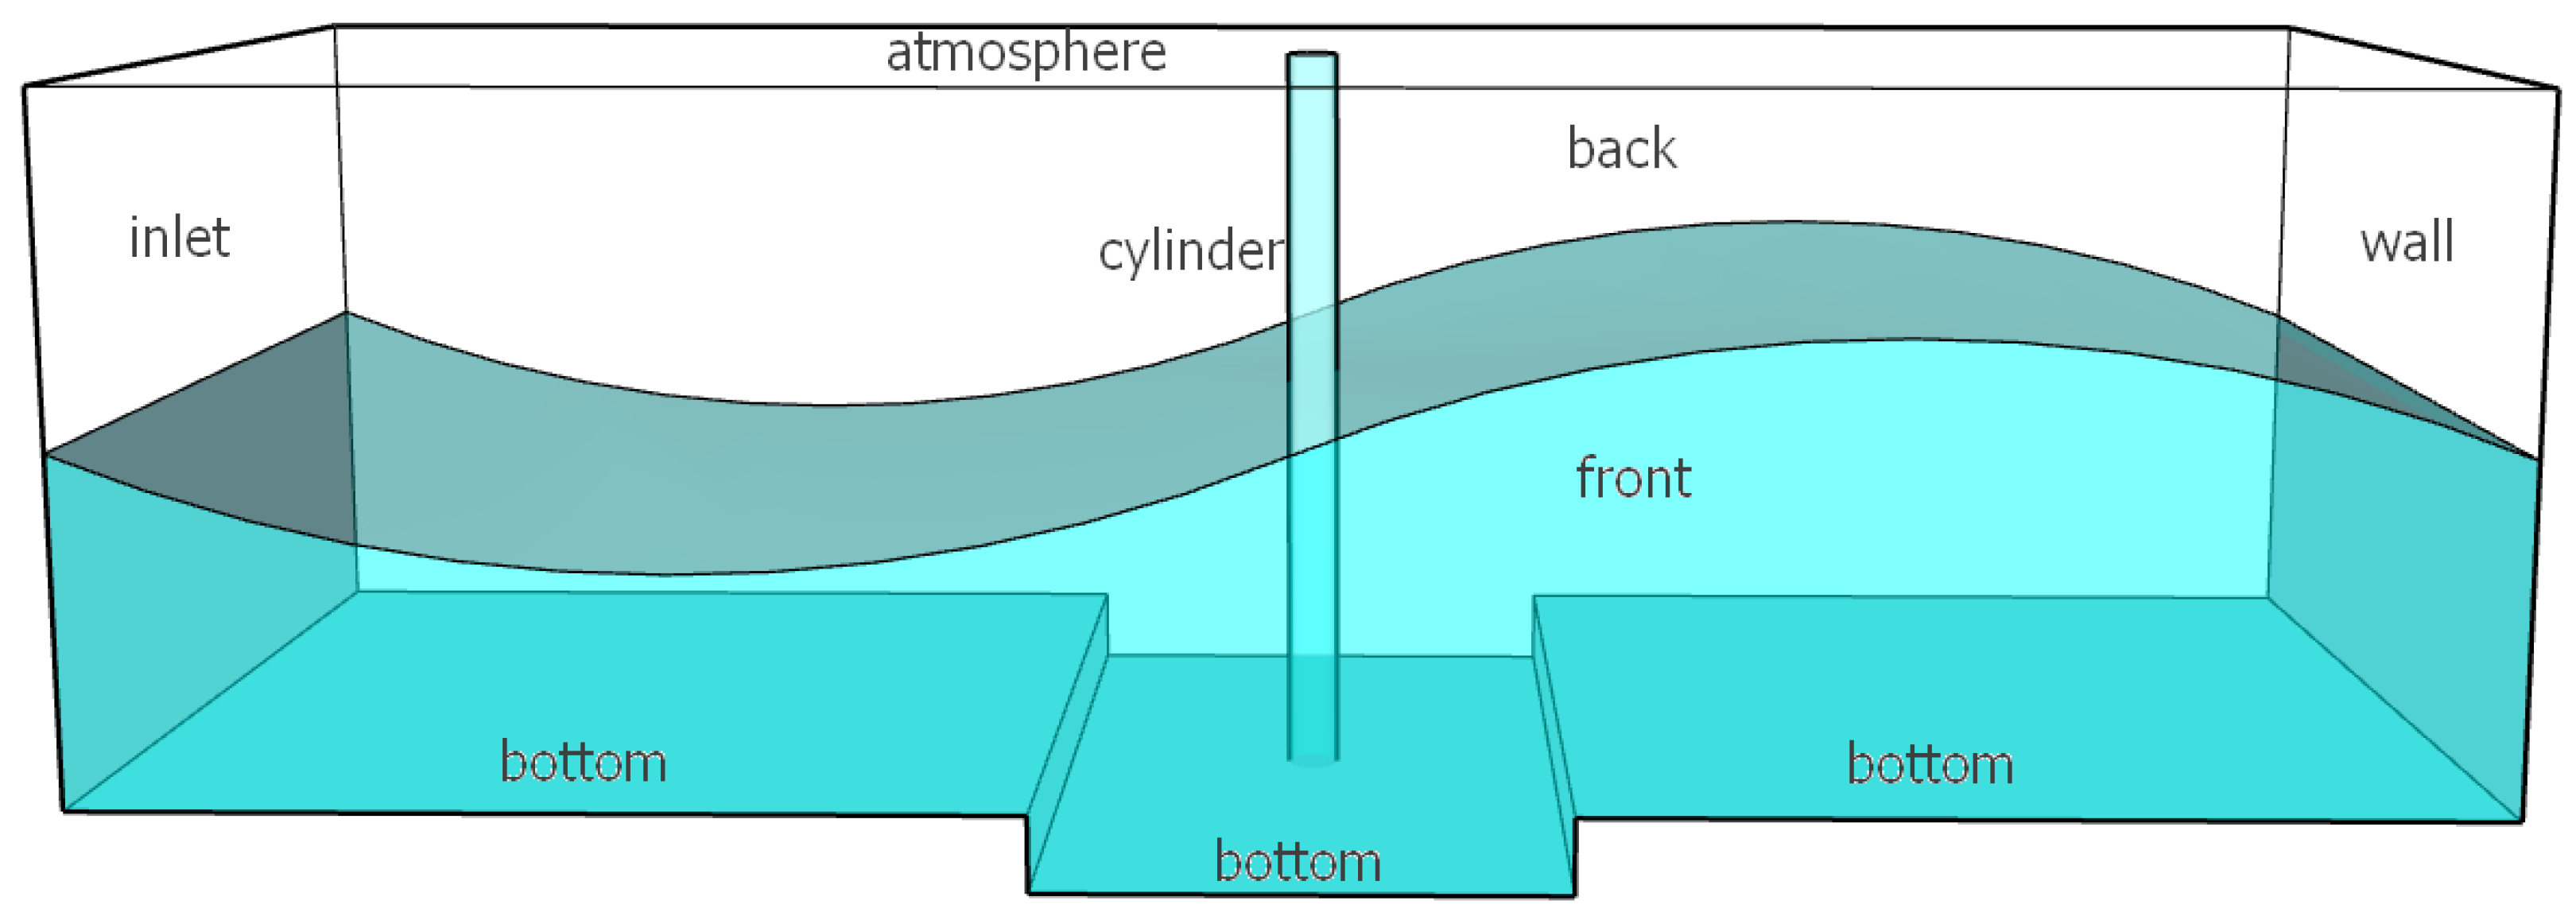 ocean wave diagram labeled